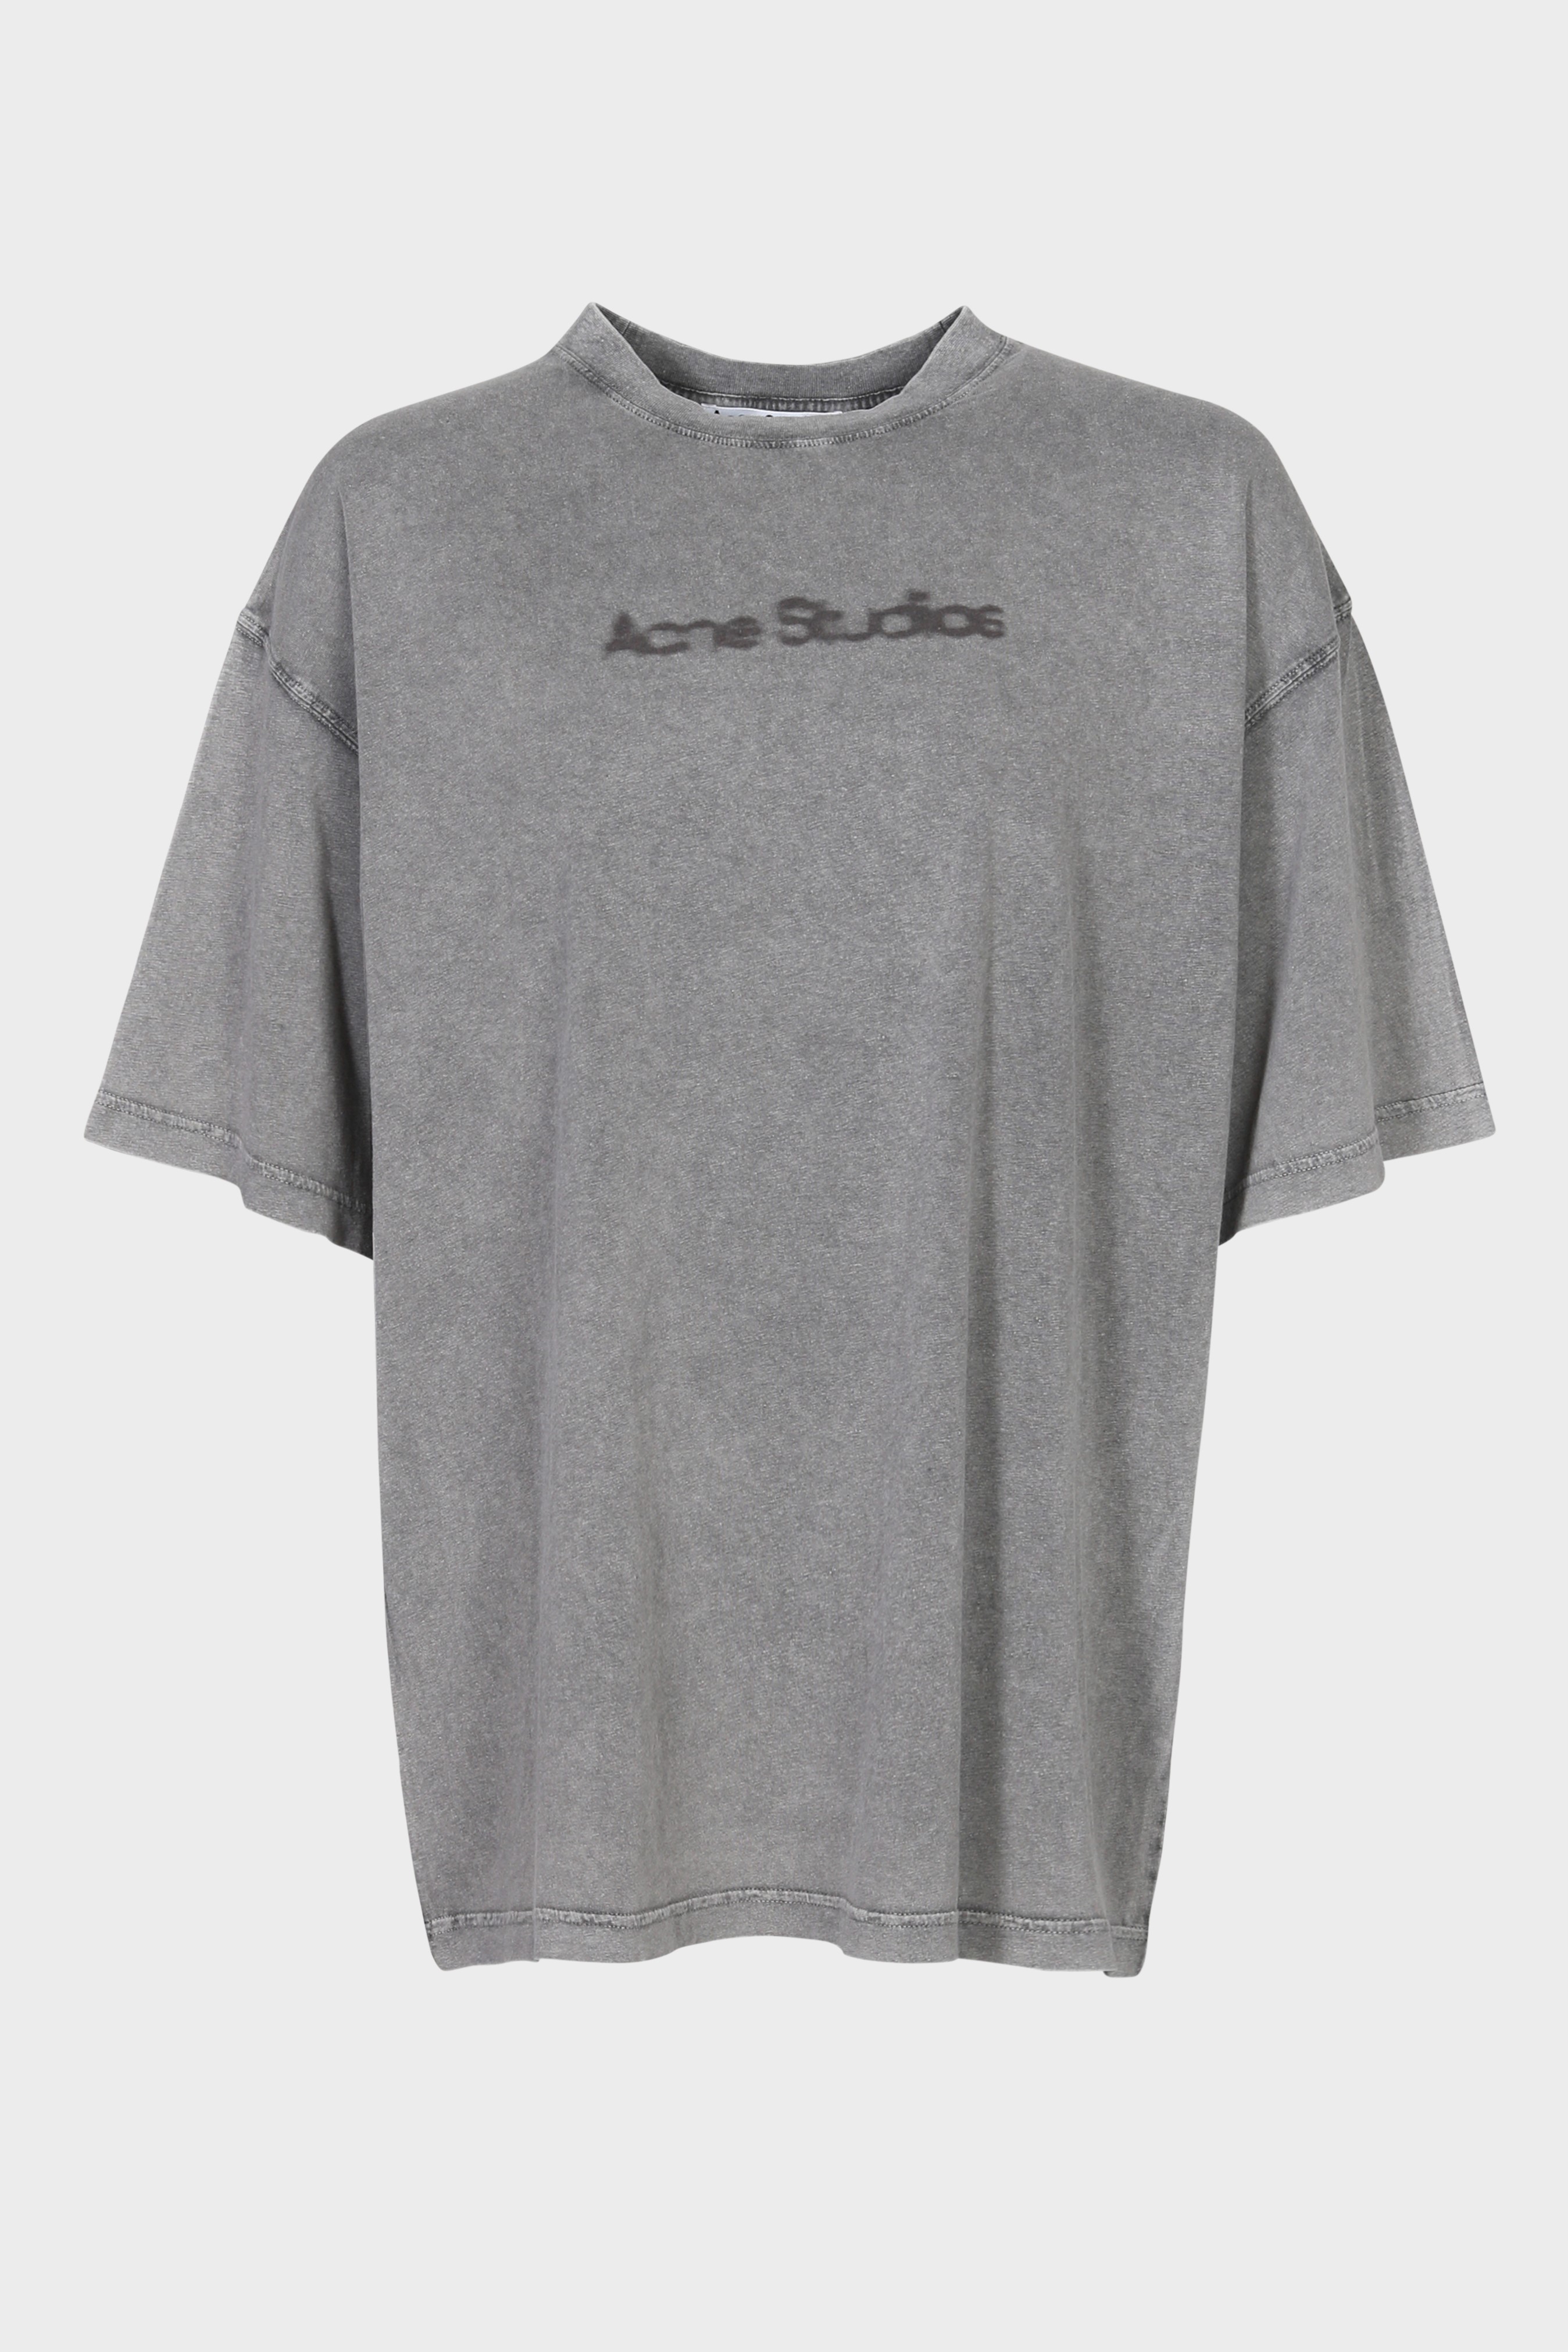 ACNE STUDIOS Logo T-Shirt in Faded Grey XS